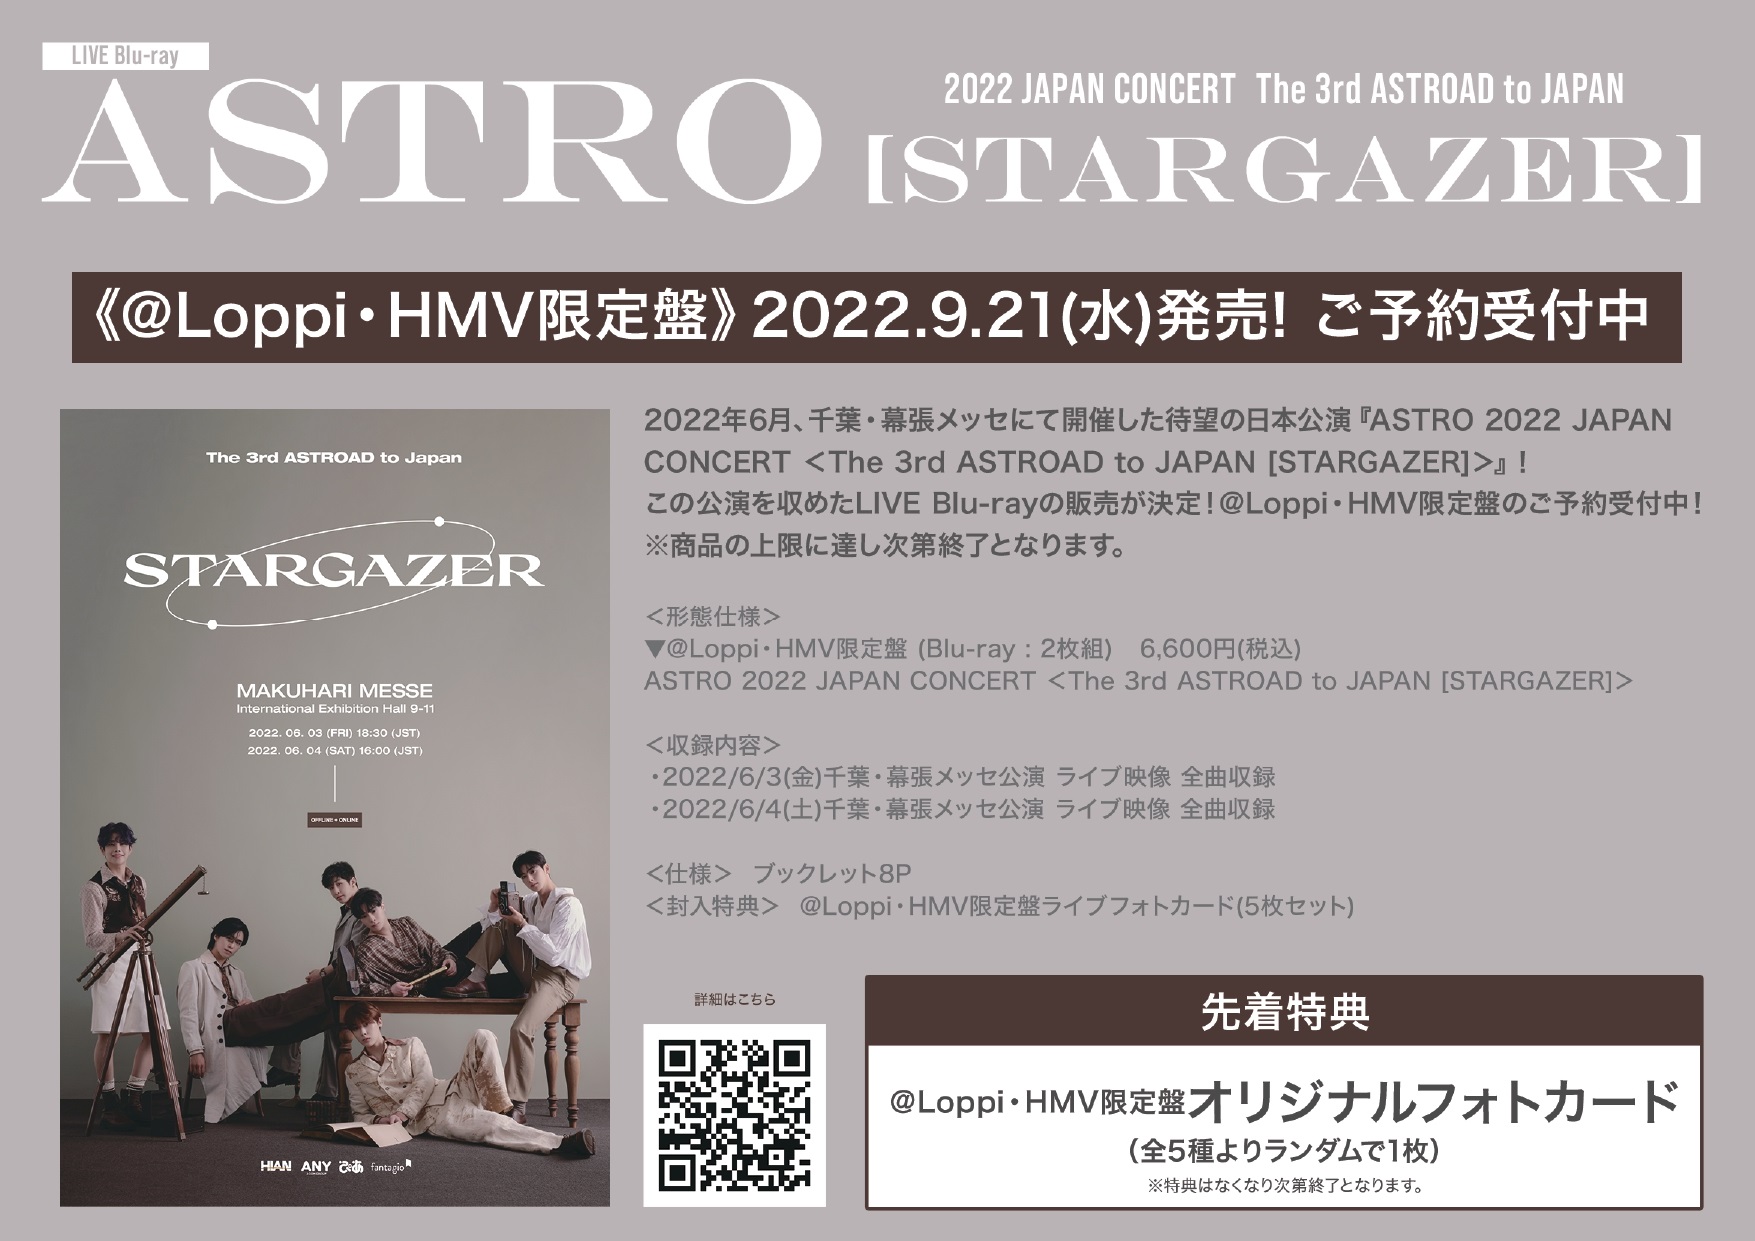 ASTRO STARGAZER Blu-ray FC限定盤 人気の商品 7111円 sandorobotics.com